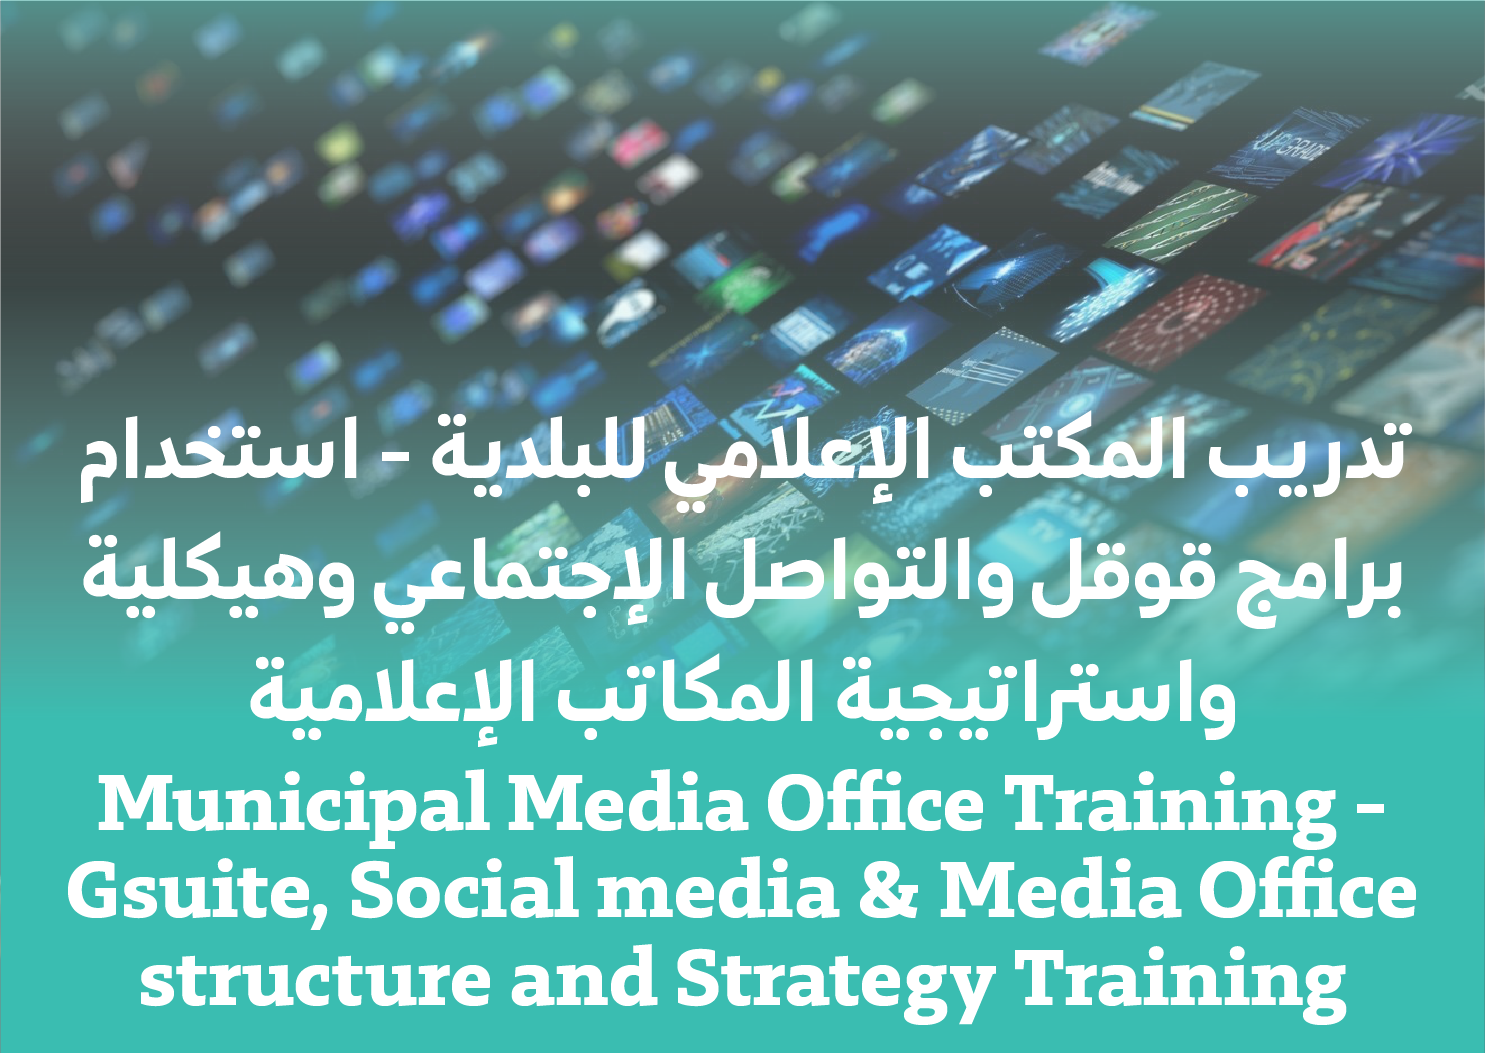 Municipal Media Office Training - Gsuite,Social media & Media Office structure and Strategy Training